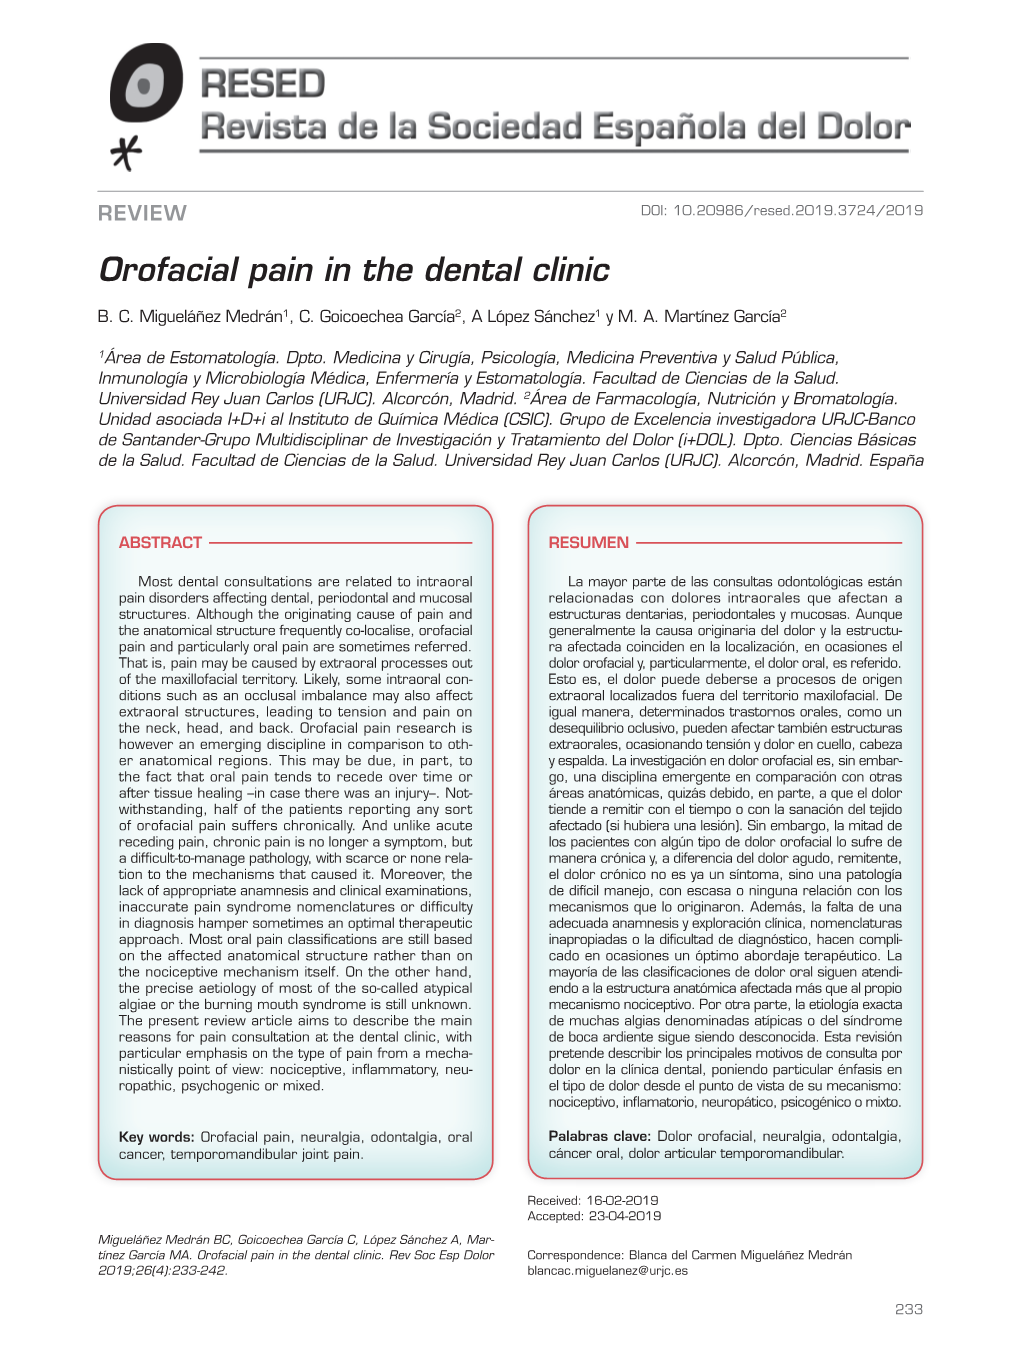 Orofacial Pain in the Dental Clinic